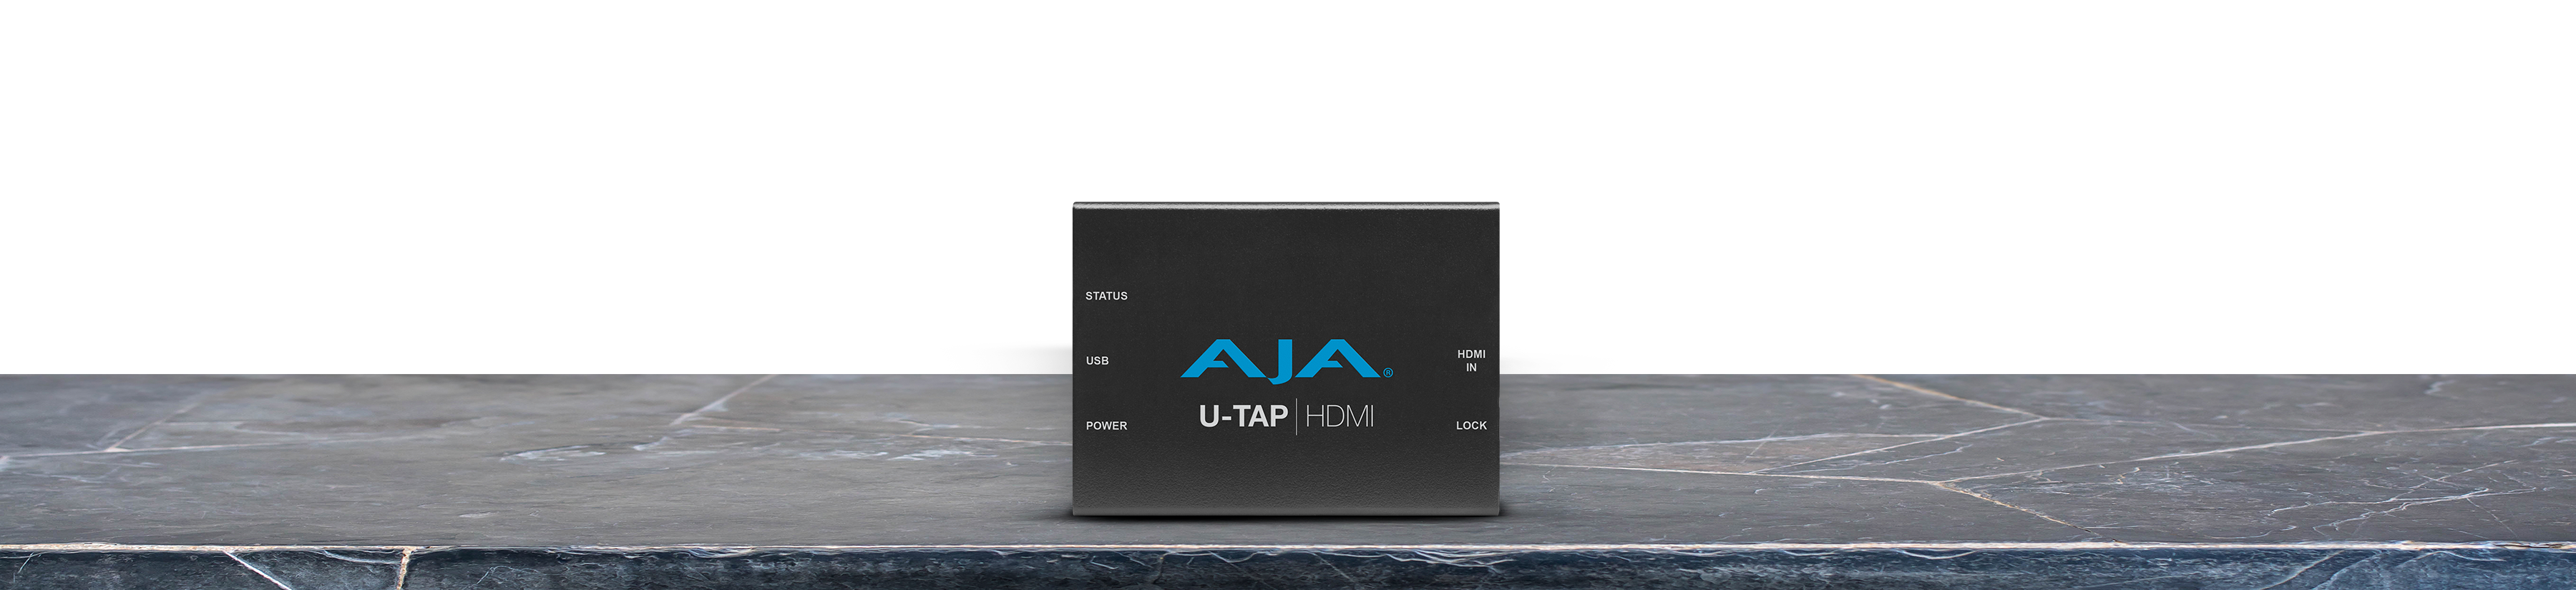 HDMI to USB Capture Card: U-TAP HDMI